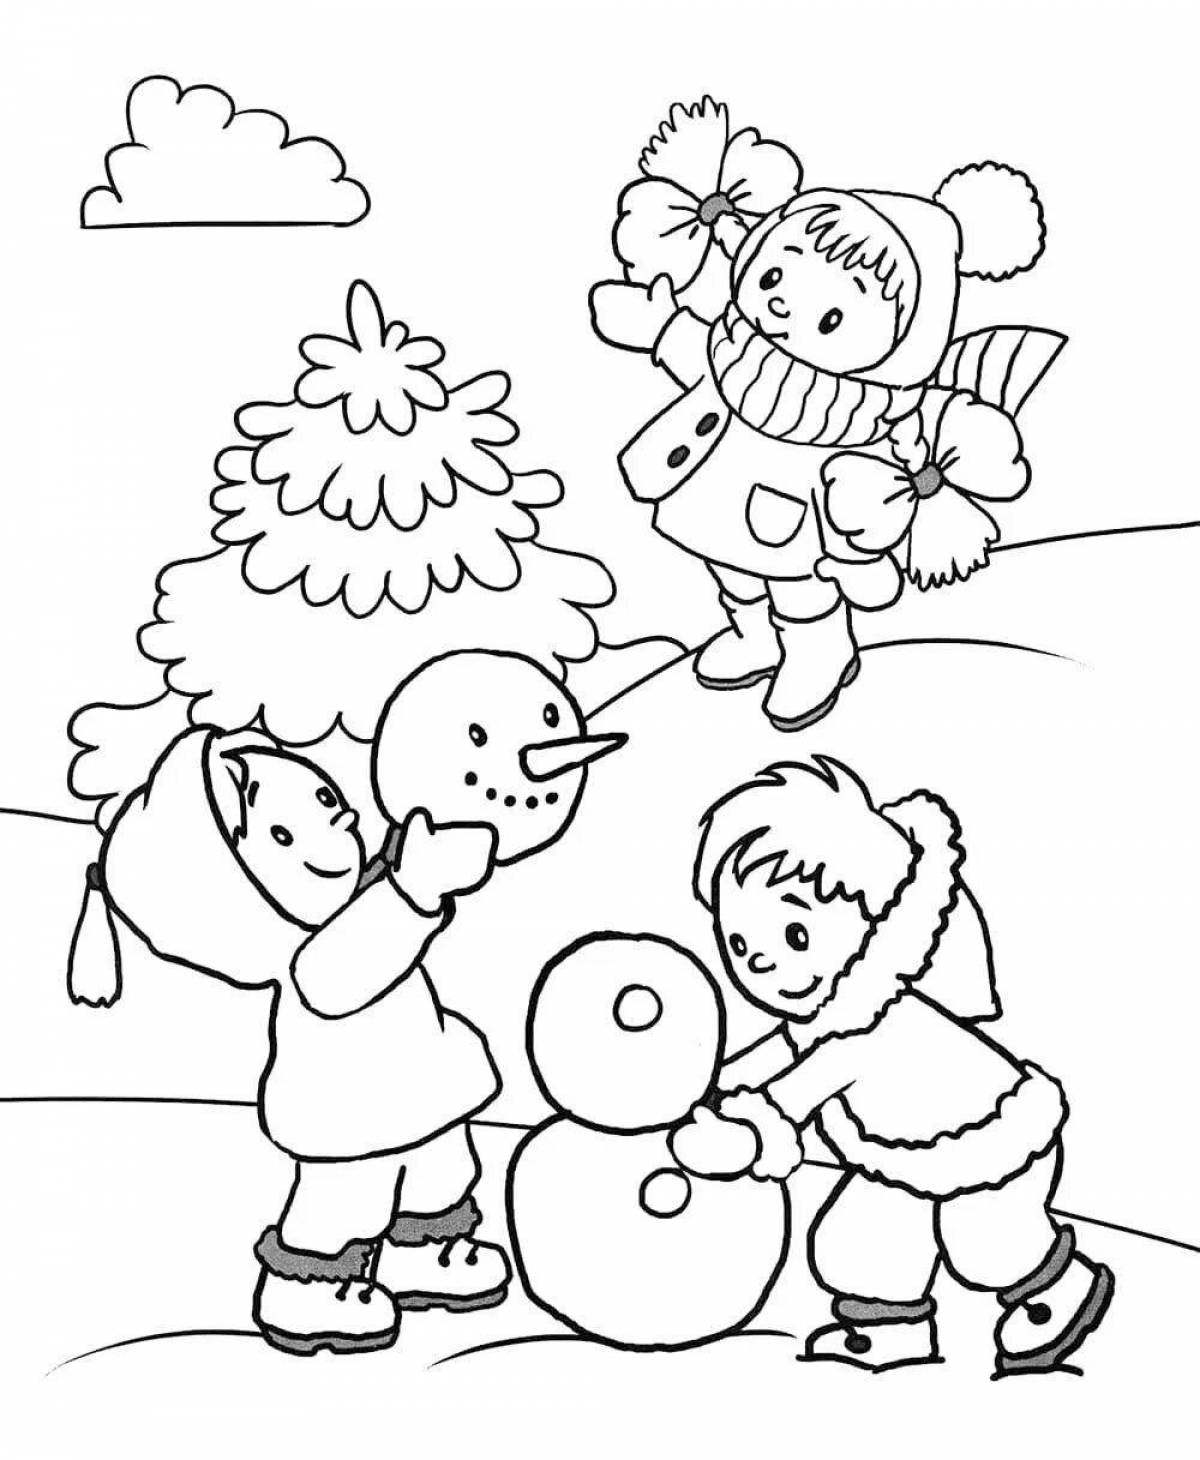 Joyful winter holidays coloring book for kids